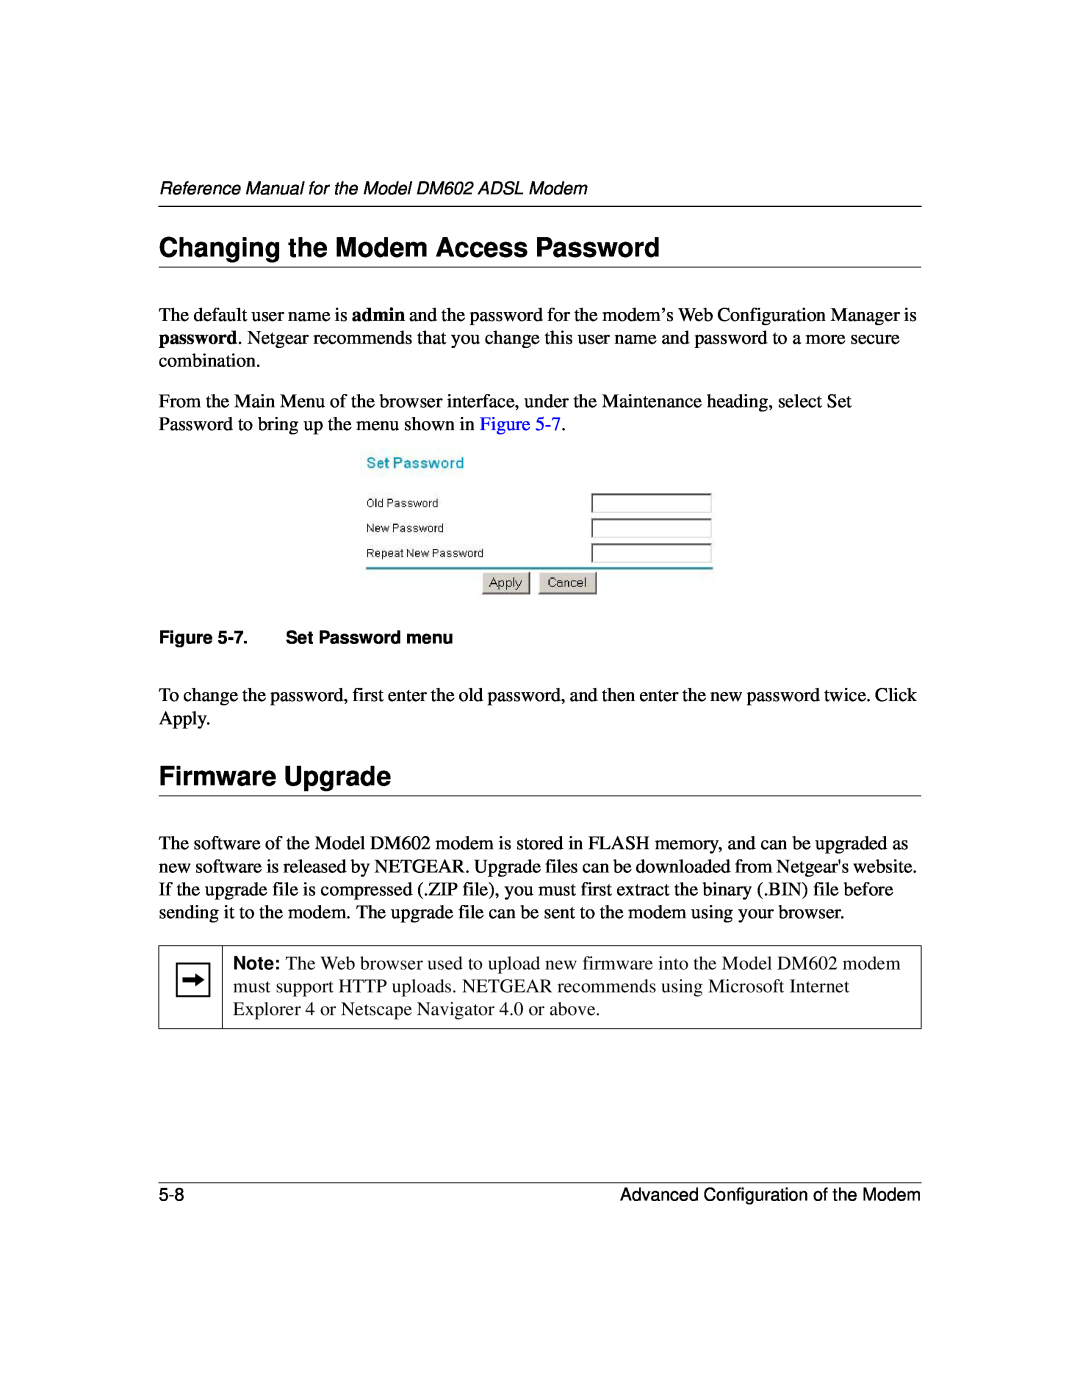 NETGEAR DM602 manual Changing the Modem Access Password, Firmware Upgrade, 7. Set Password menu 